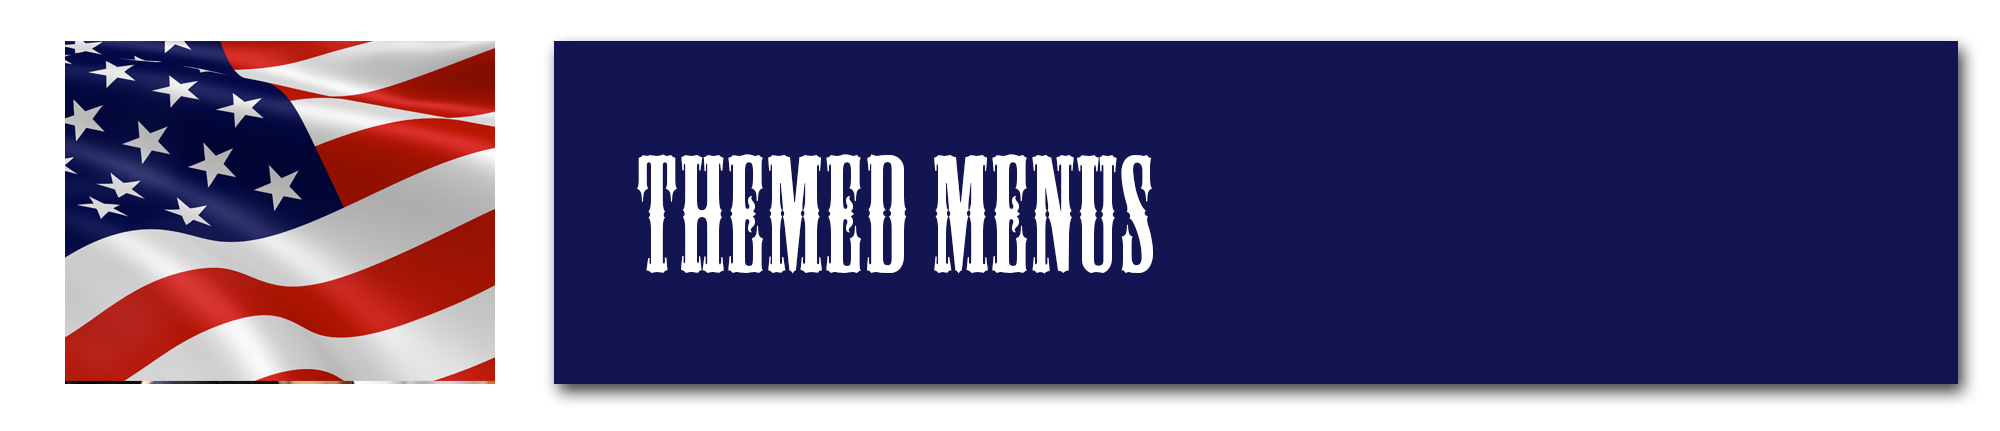 Themed Menus